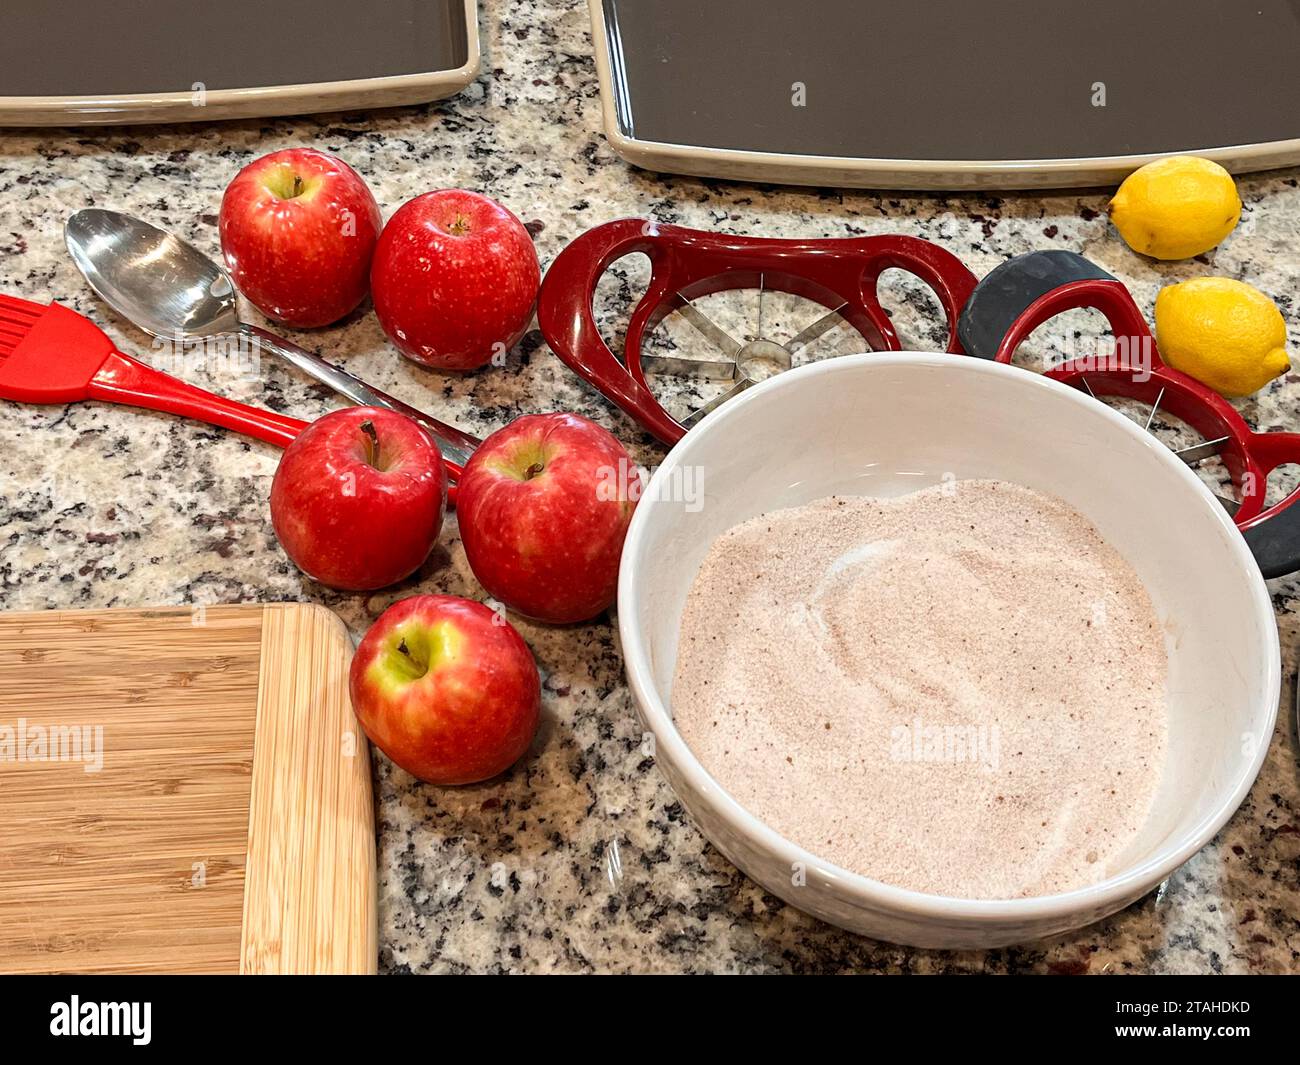 Kitchen counter while baking an apple dessert Stock Photo